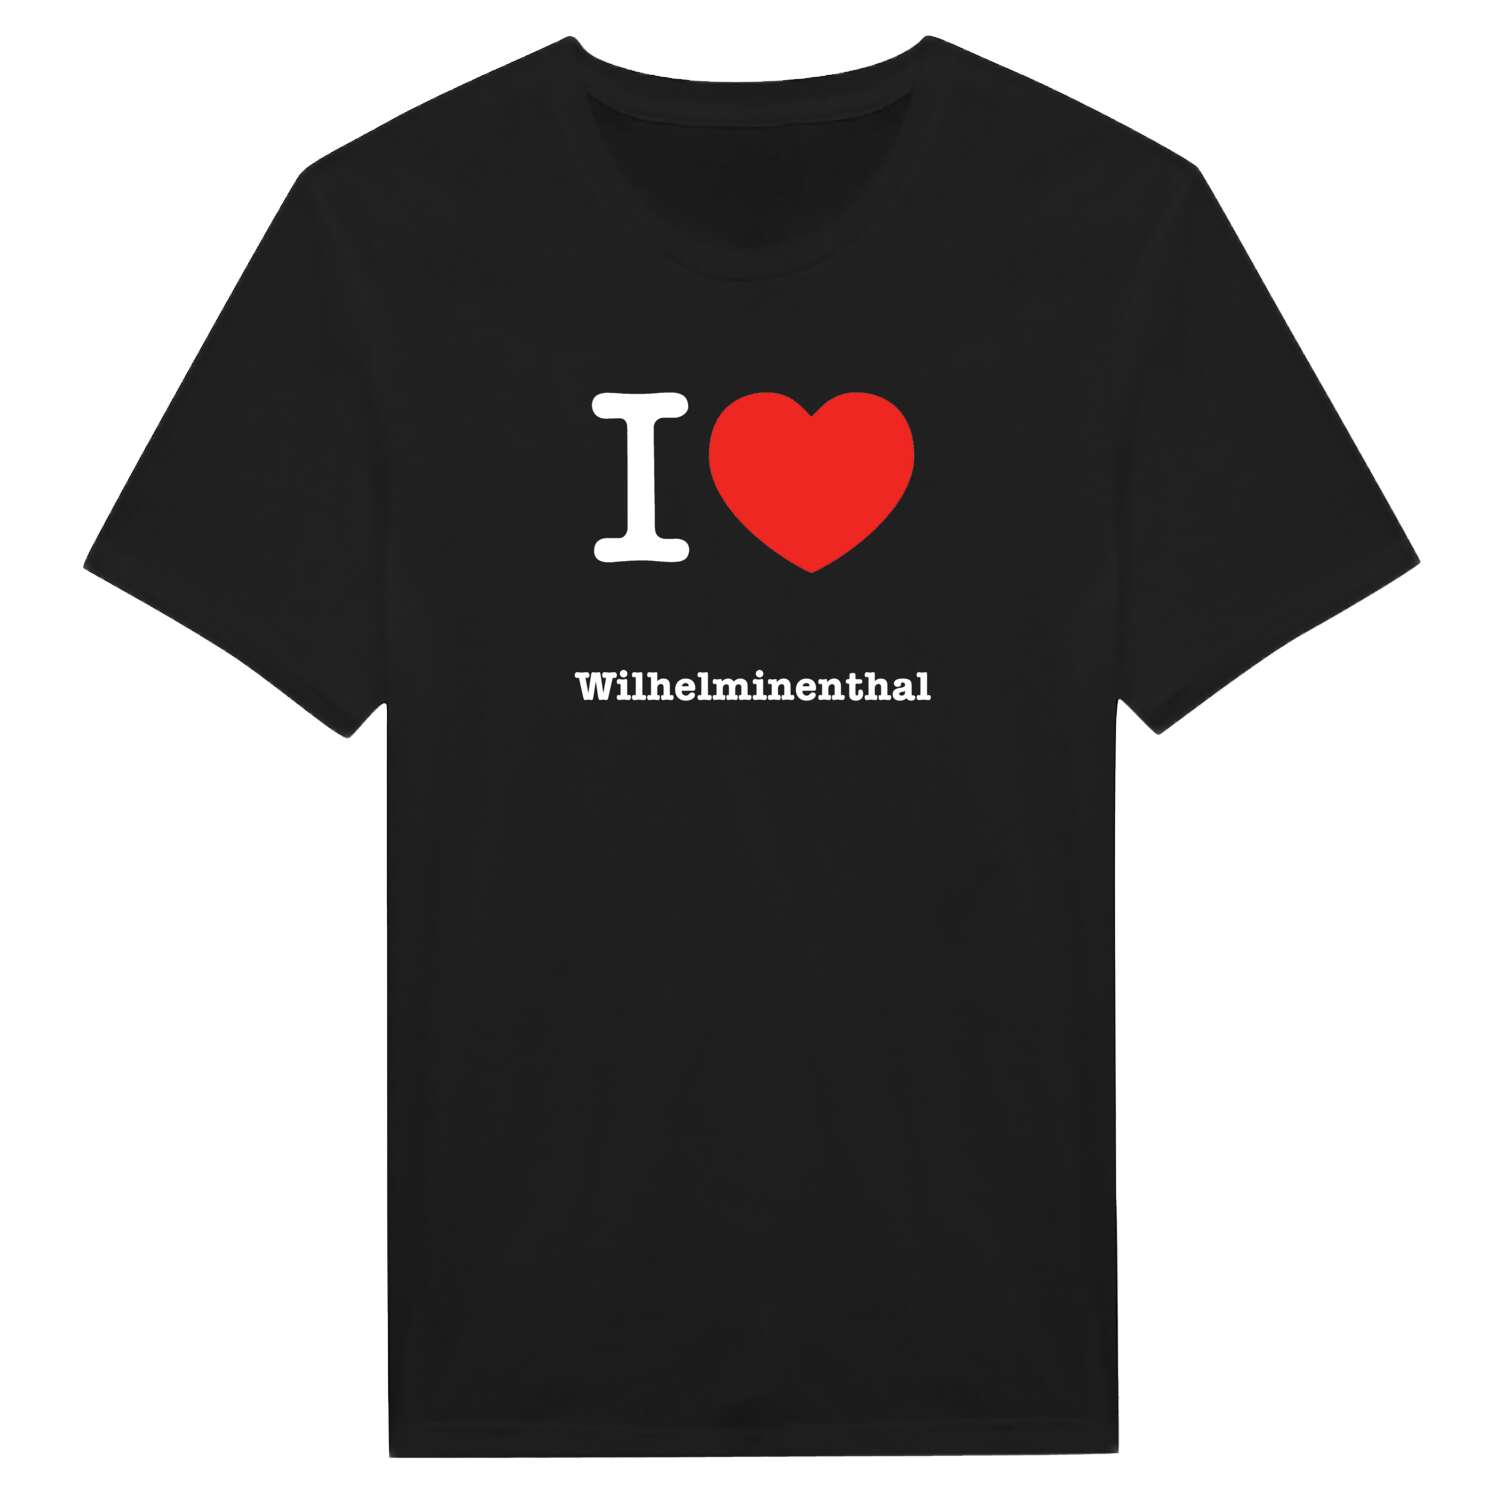 Wilhelminenthal T-Shirt »I love«